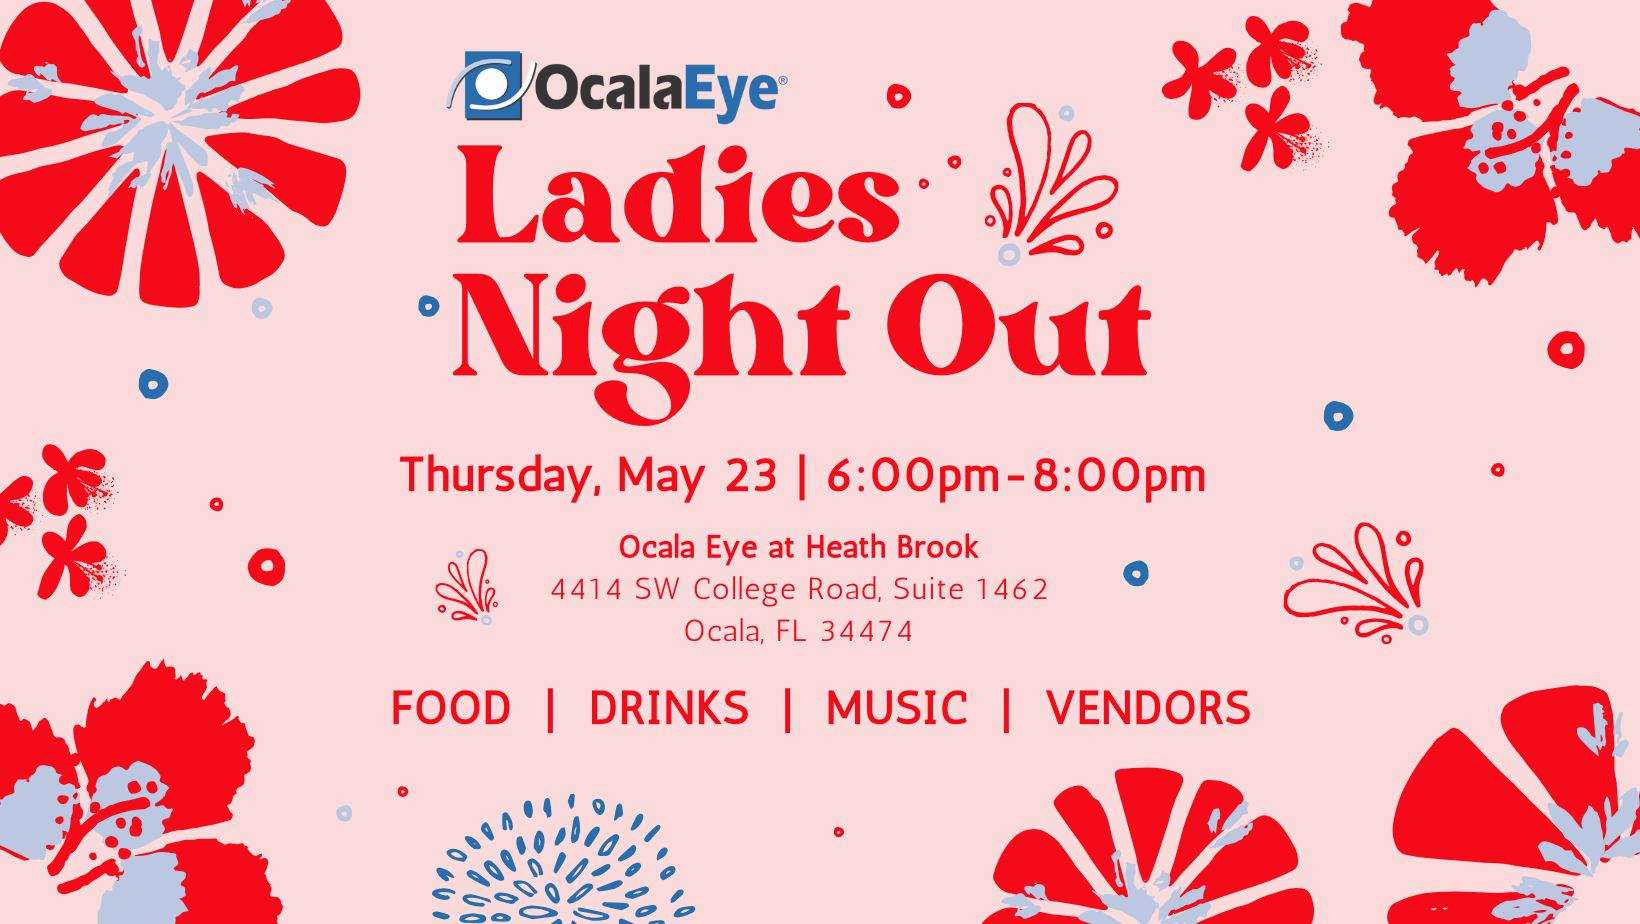 ocala eyes ladies night out